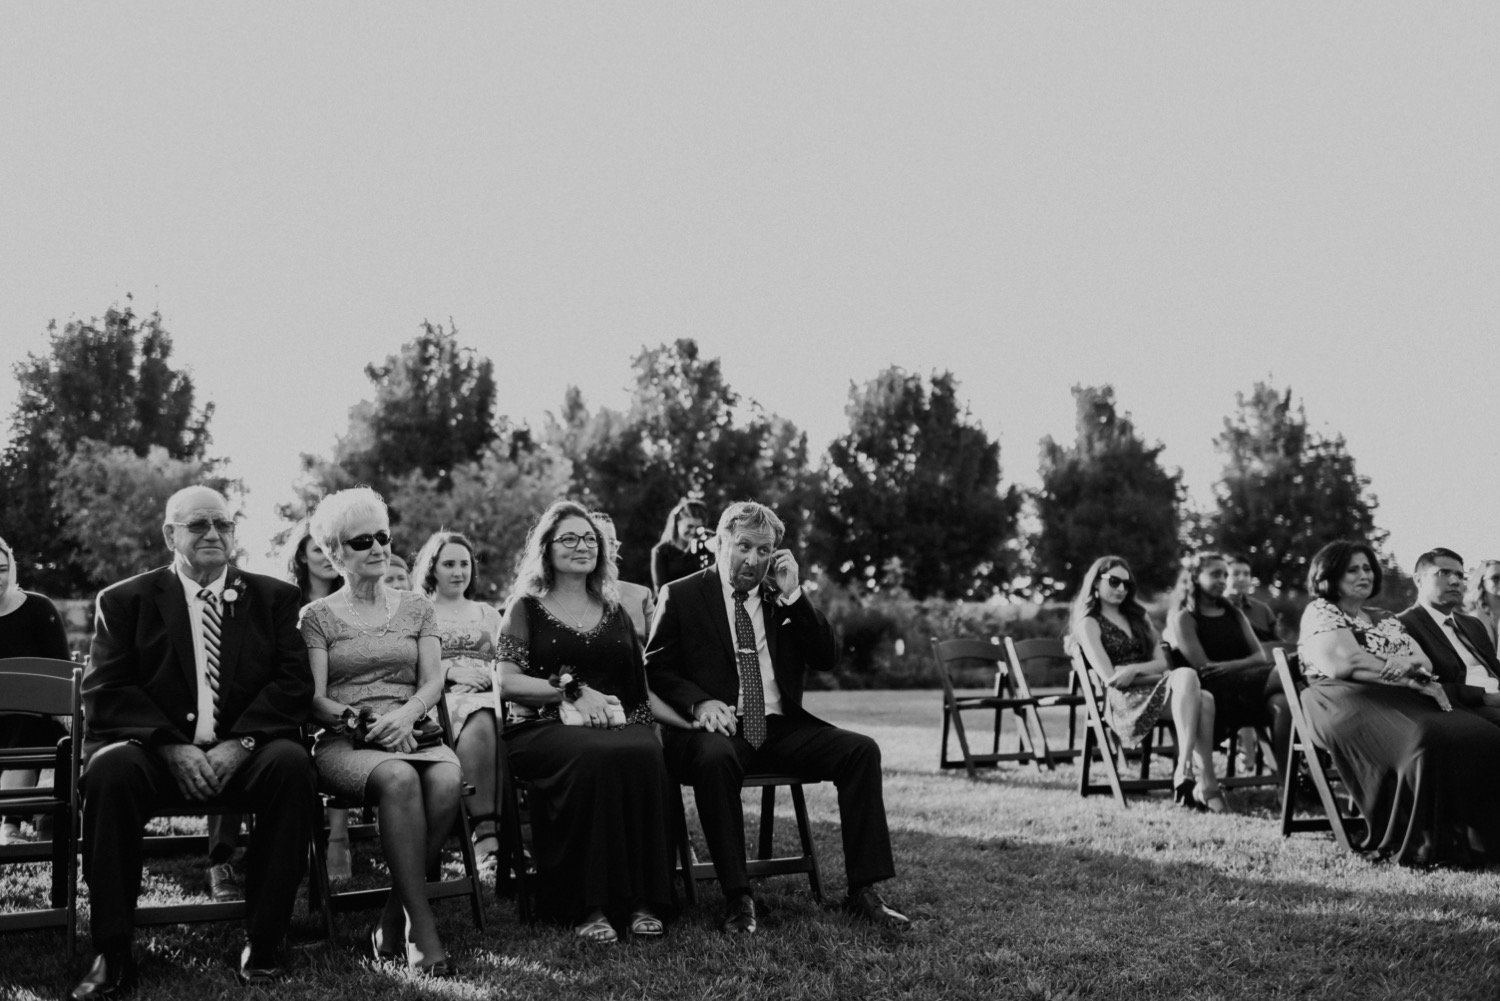 Candid-documentary-wedding-photography-.jpg.jpg